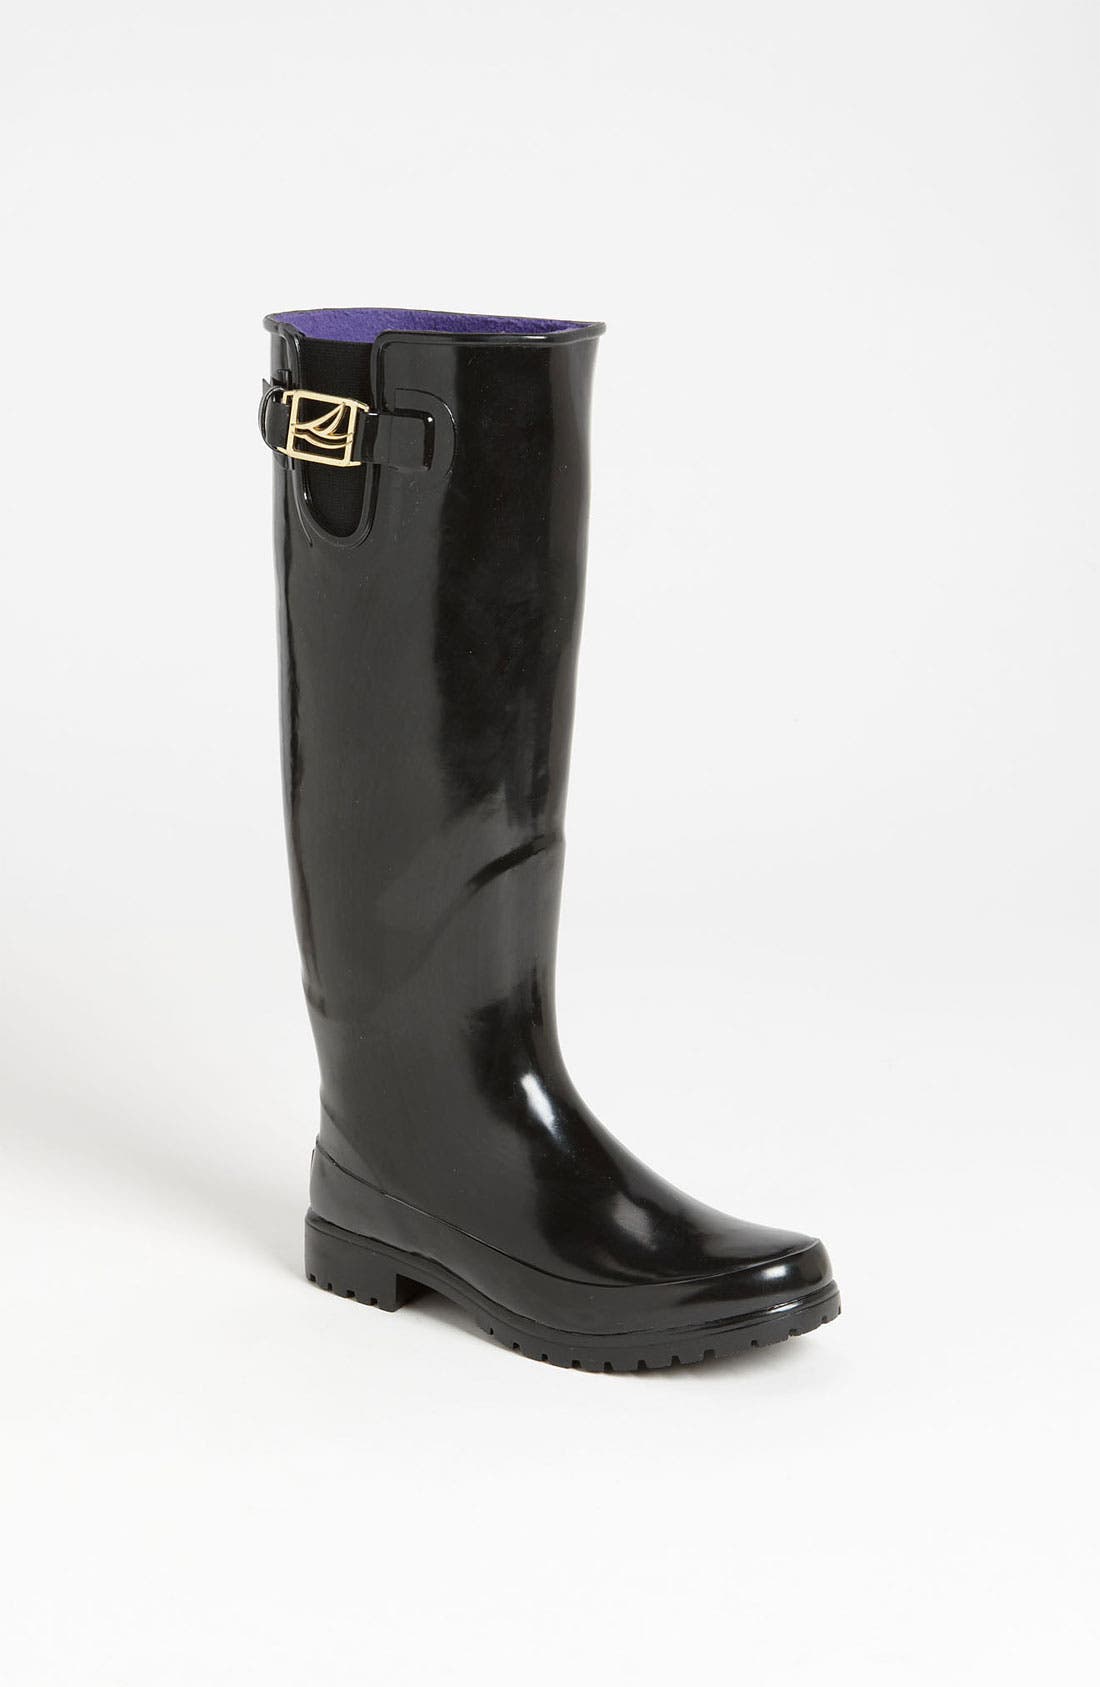 nordstrom sperry rain boots